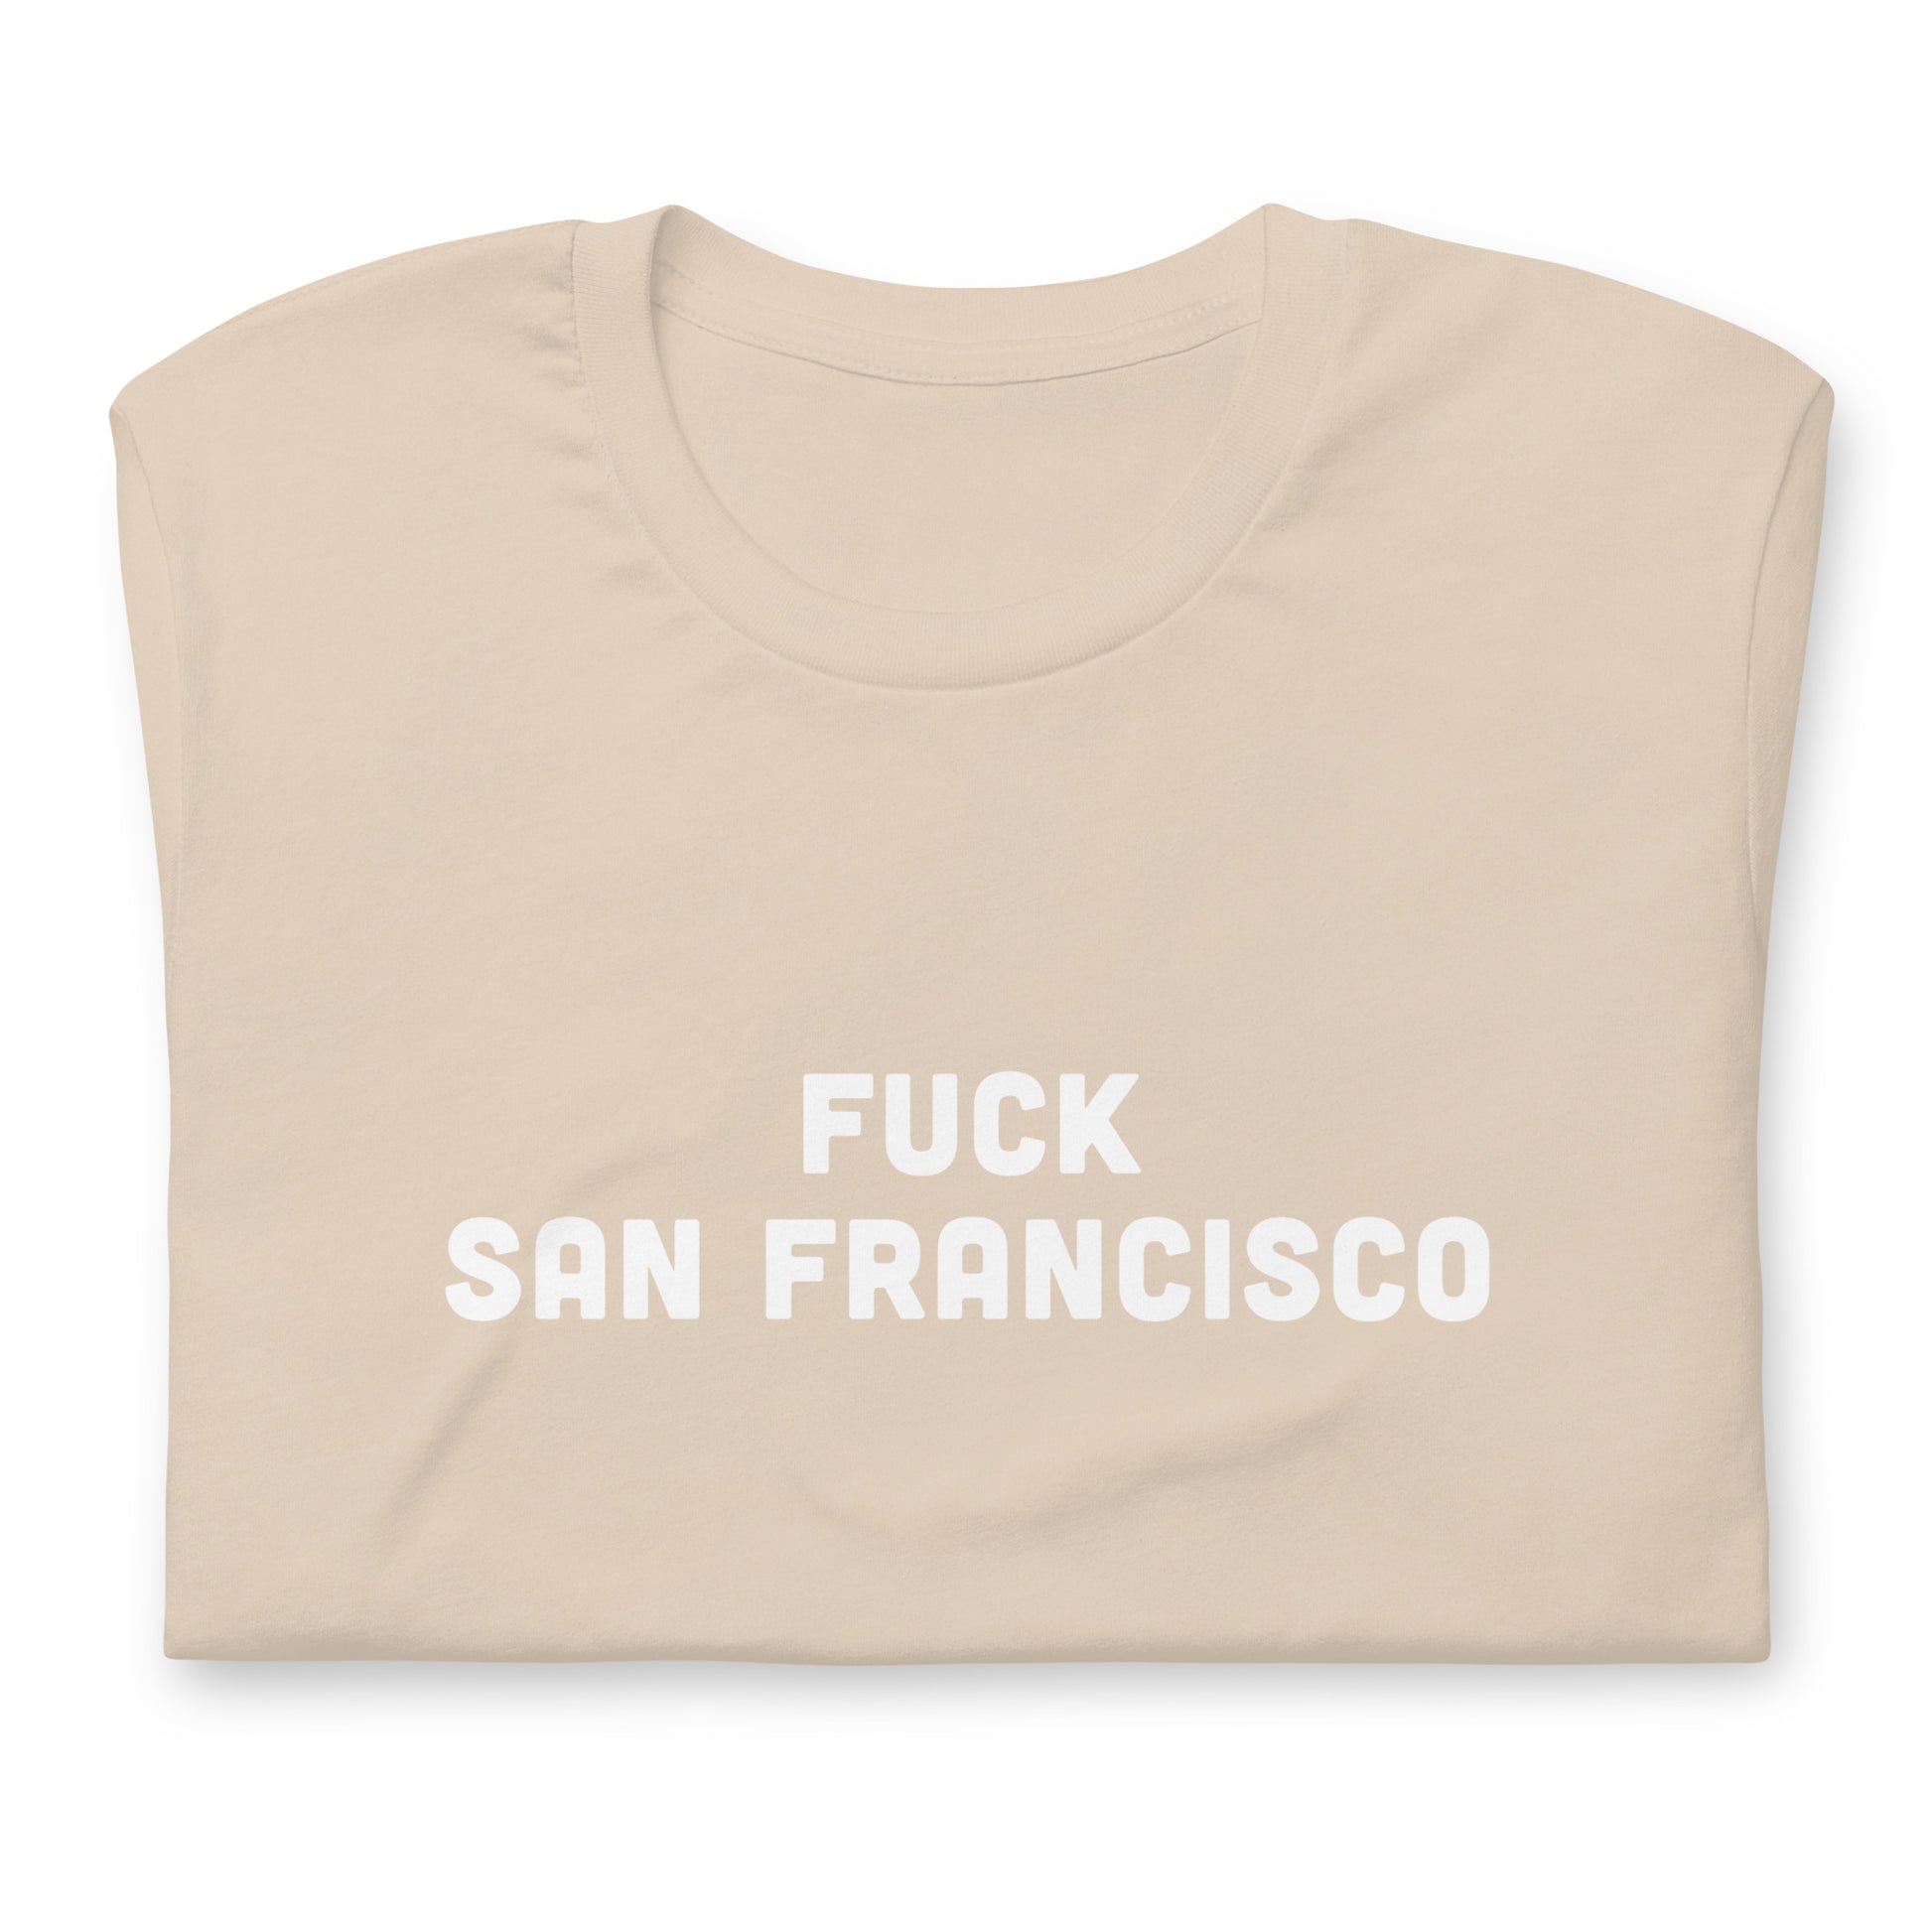 Fuck San Francisco T-Shirt Size L Color Asphalt